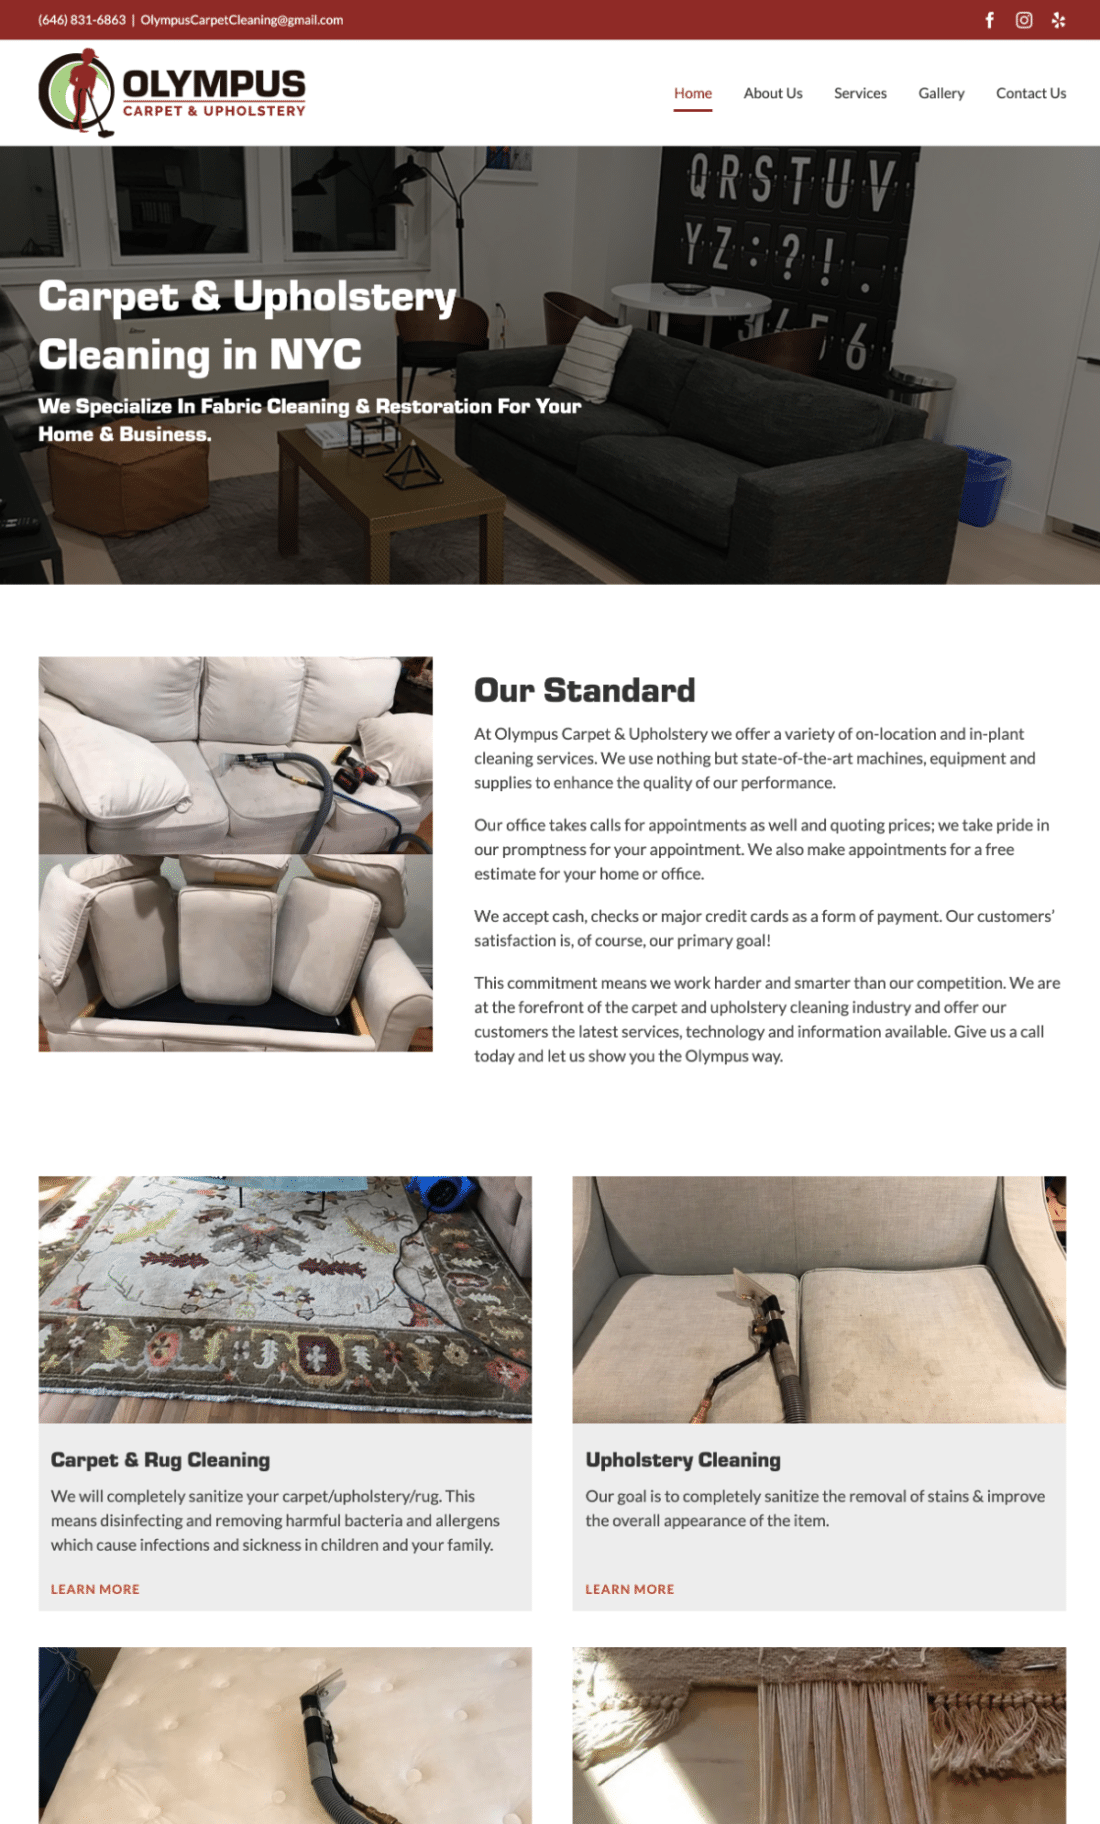 Olympus Carpet & Upholstery